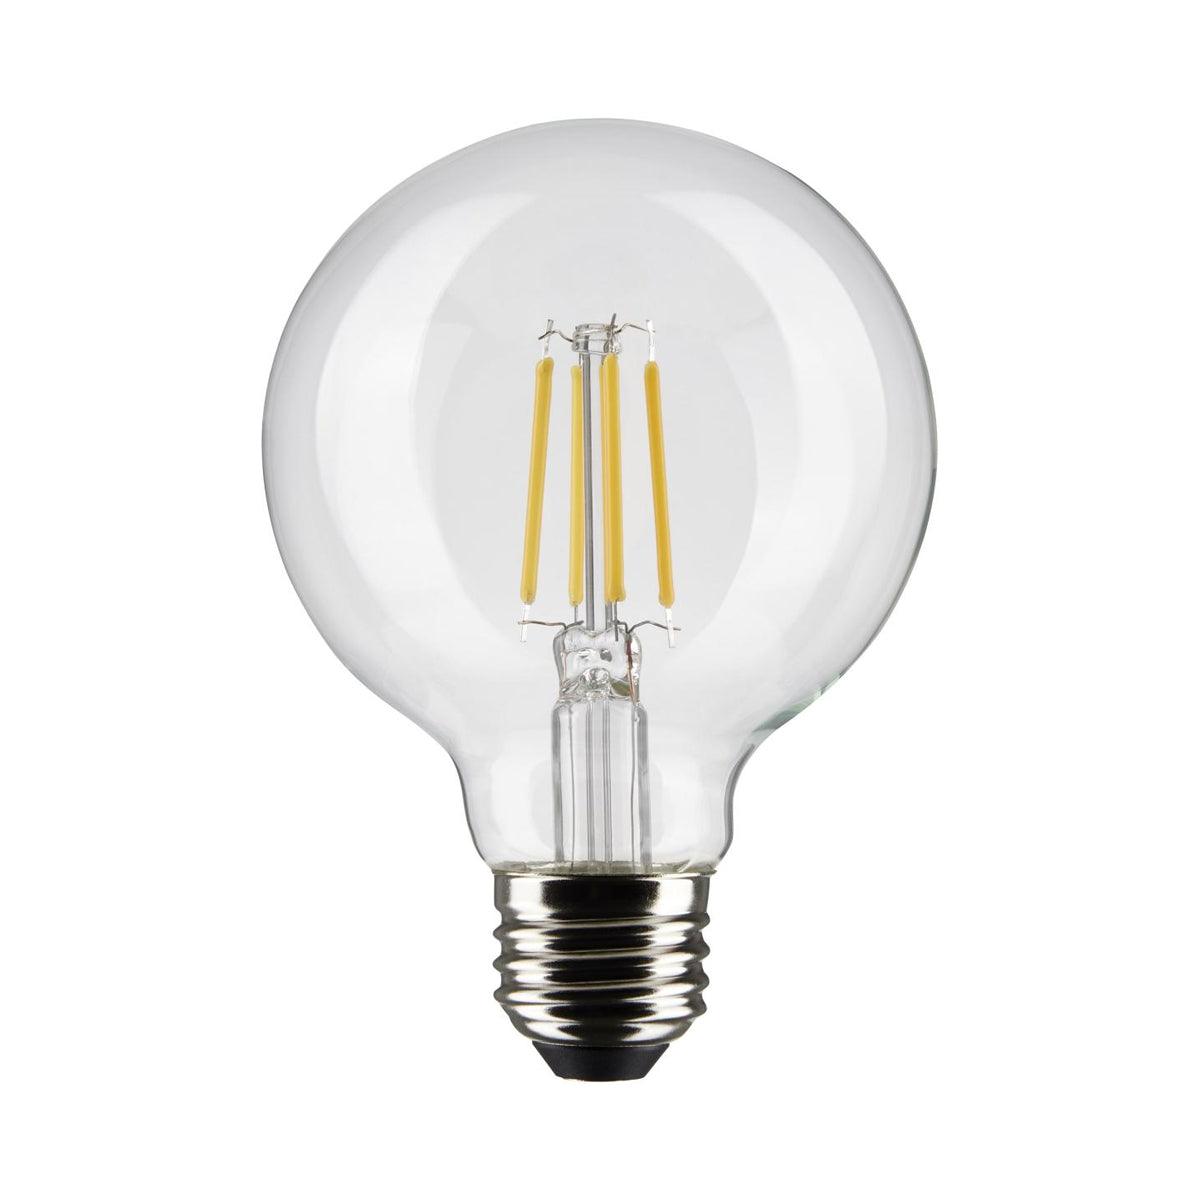 G25 Filament LED Globe Bulb, 5 Watt, 350 Lumens, 3000K, E26 Medium Base, Clear Finish, Pack Of 2 - Bees Lighting